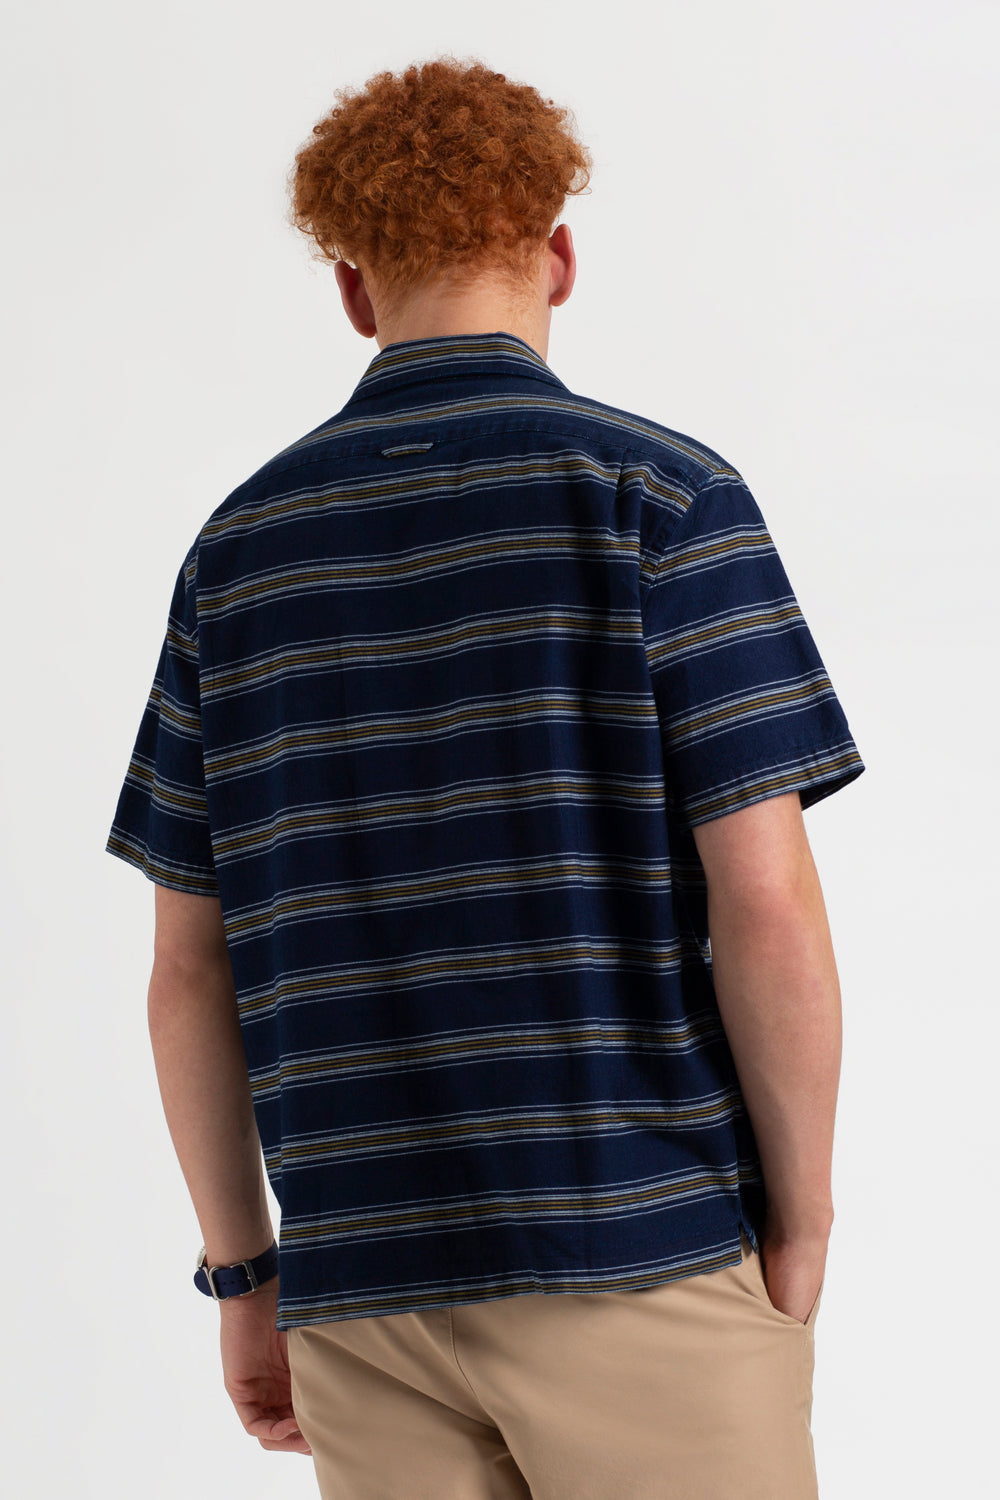 Dalston Blues Short Sleeve Indigo Stripe Beach Shirt